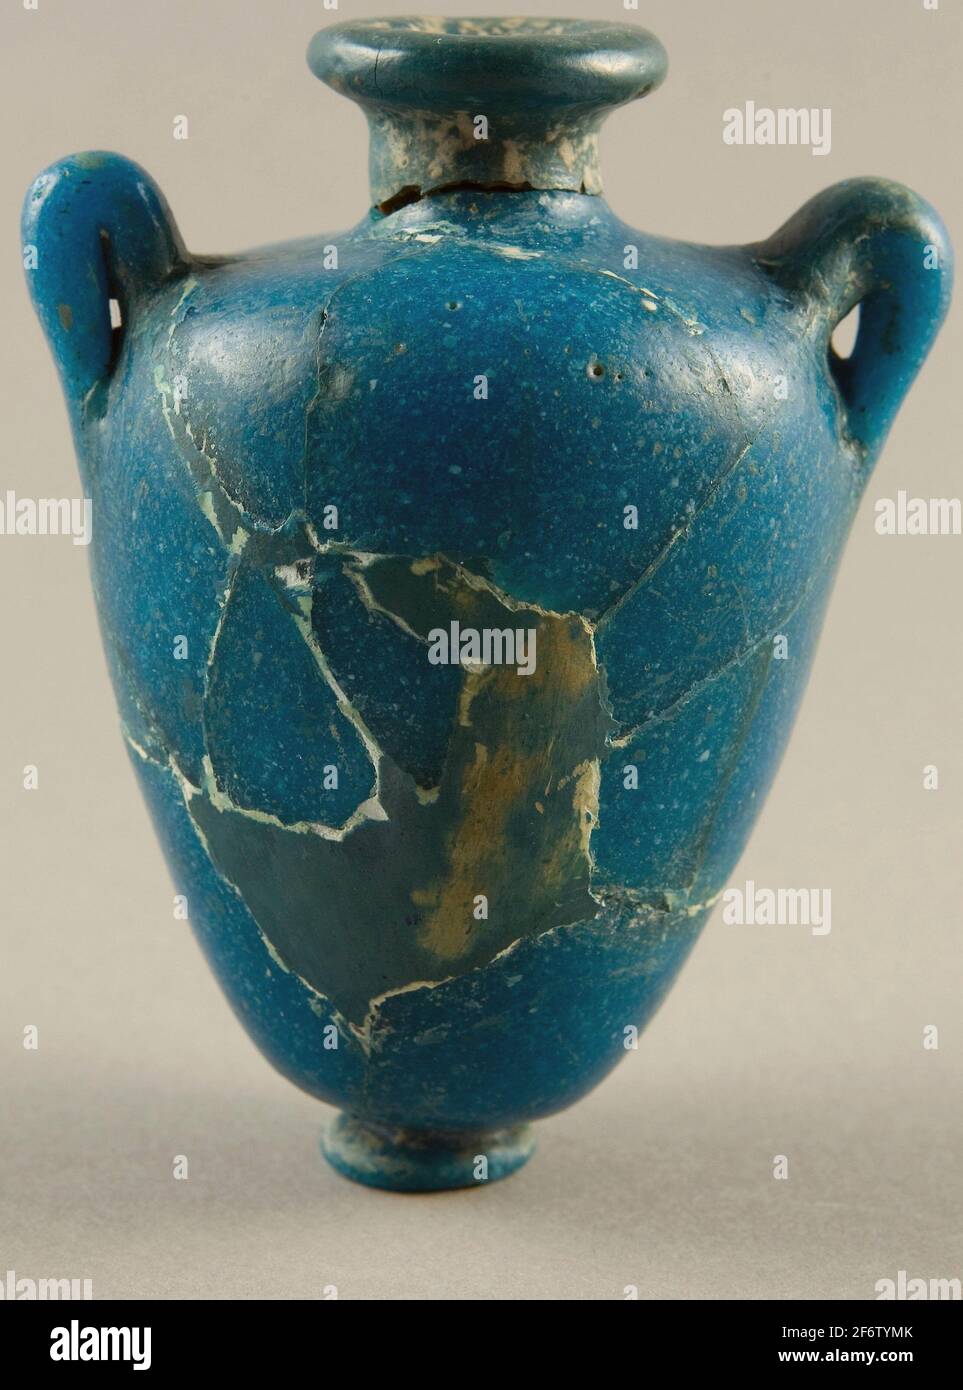 Author: Ancient Egyptian. Vase - New Kingdom Period, Dynasty 19 (1292'1202 BC) - Egyptian. Glass. 1292 BC'1202 BC. Stock Photo